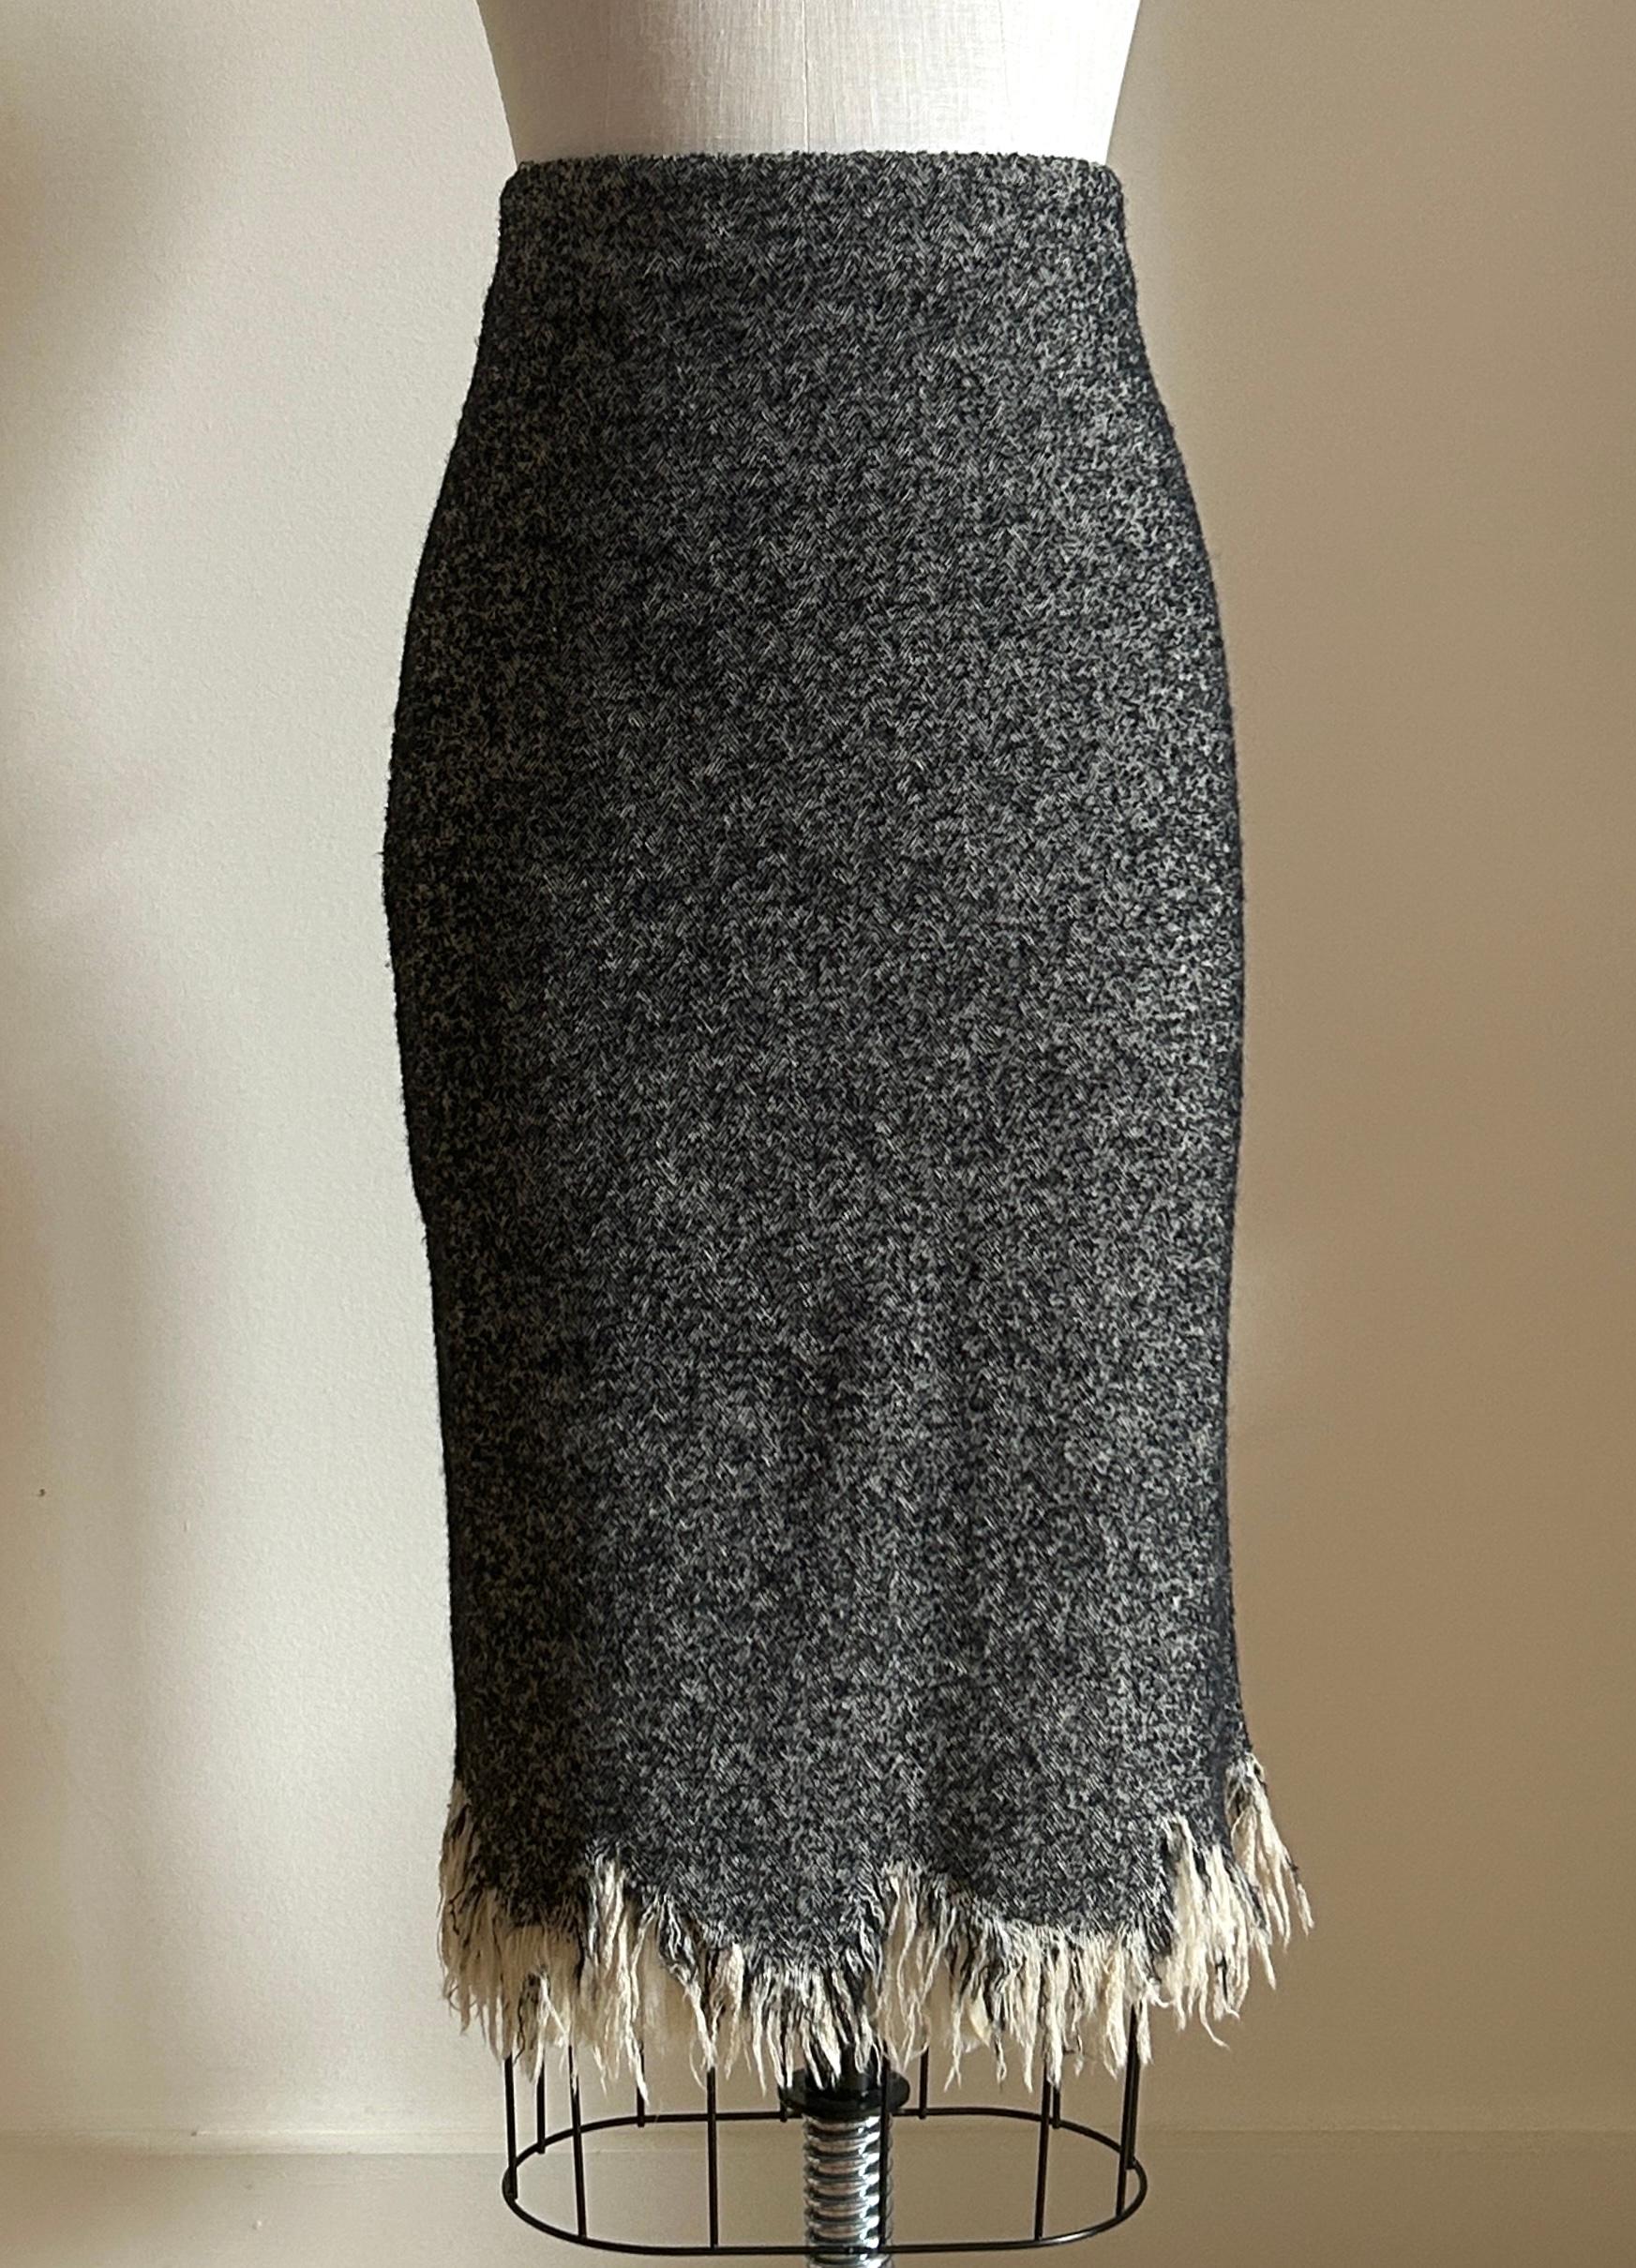 Alexander McQueen 2010 skirt in cream and black nubby herringbone tweed. Distressed hem with cream chiffon pleated ruffles at trim. Back zip and hook and eye. 

Fabric 1: 49% wool, 34% fleece wool, 17% polyamide. 
Fabric 2: 100% silk.  
Fully lined